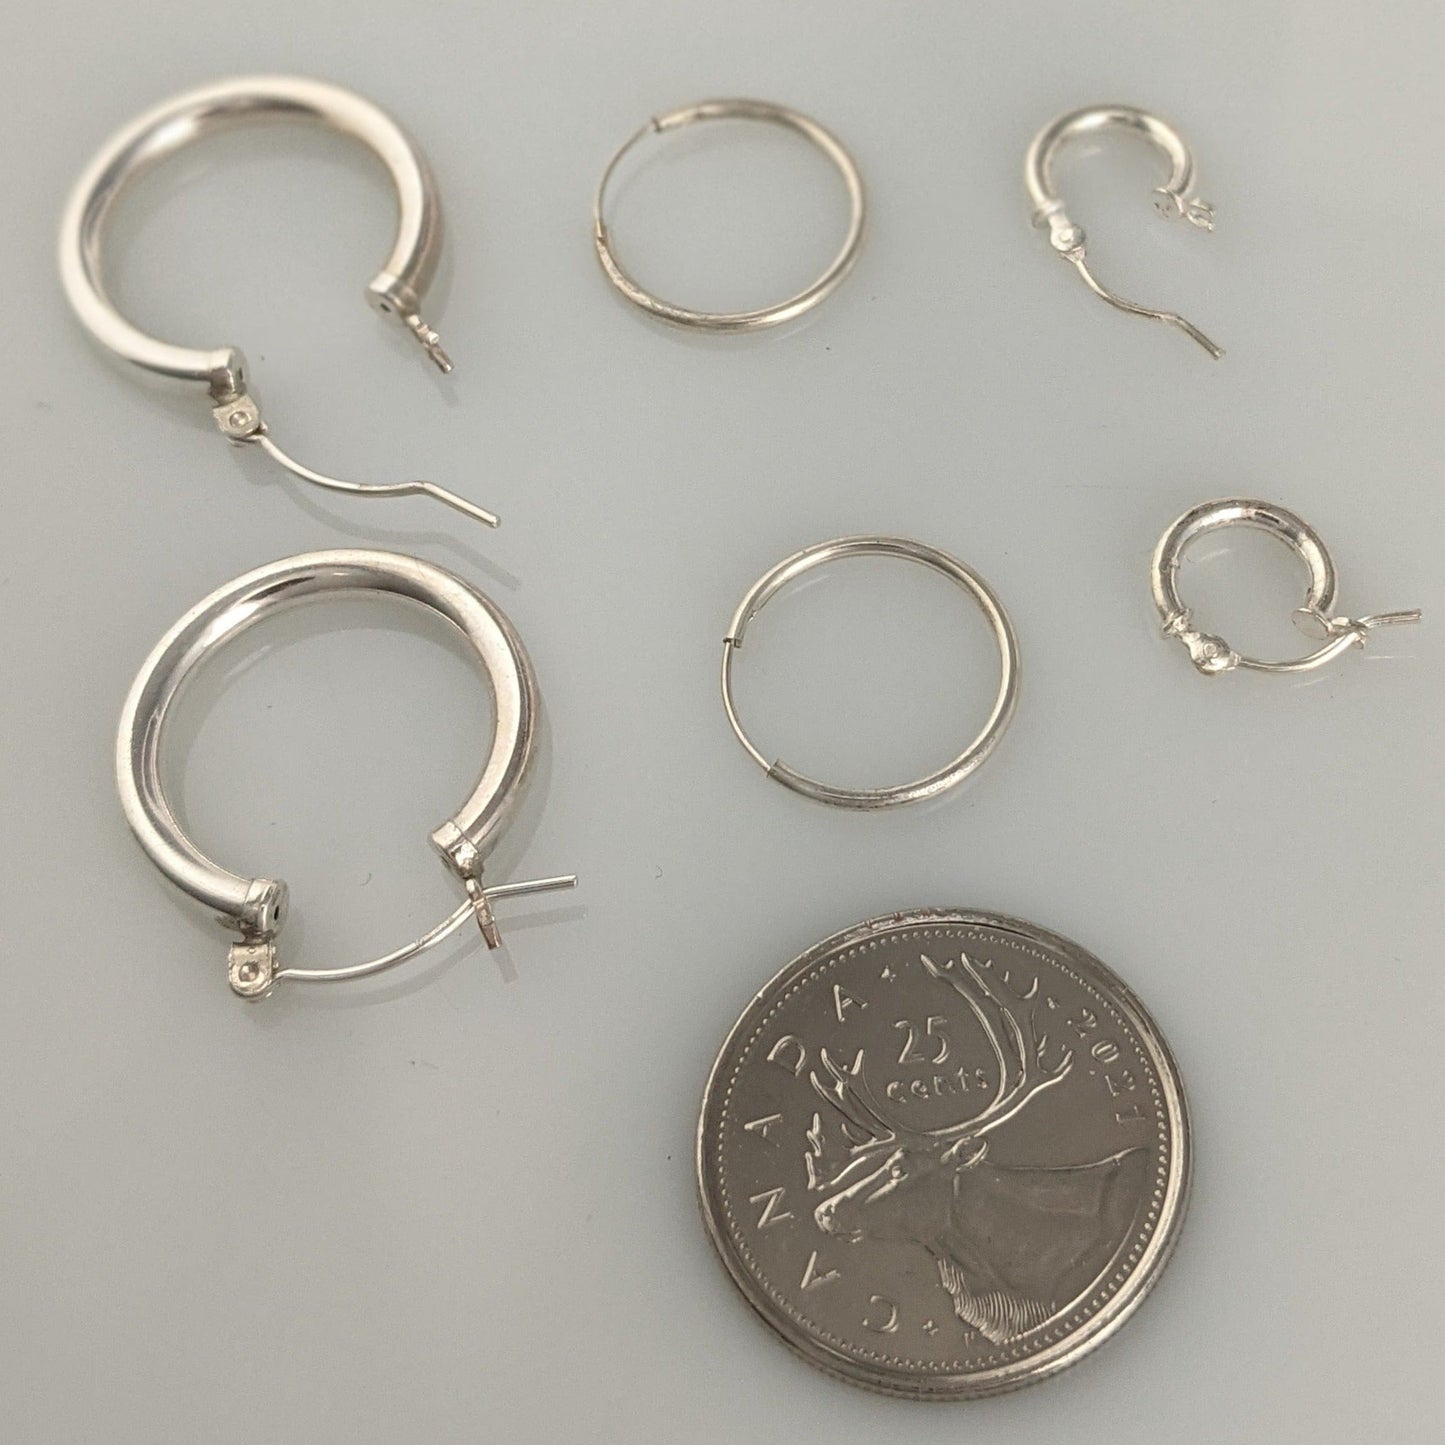 Machine fabricated hinged hoop earrings sterling silver 22mm hollow tube lightweight economical GemRapture Jewellery